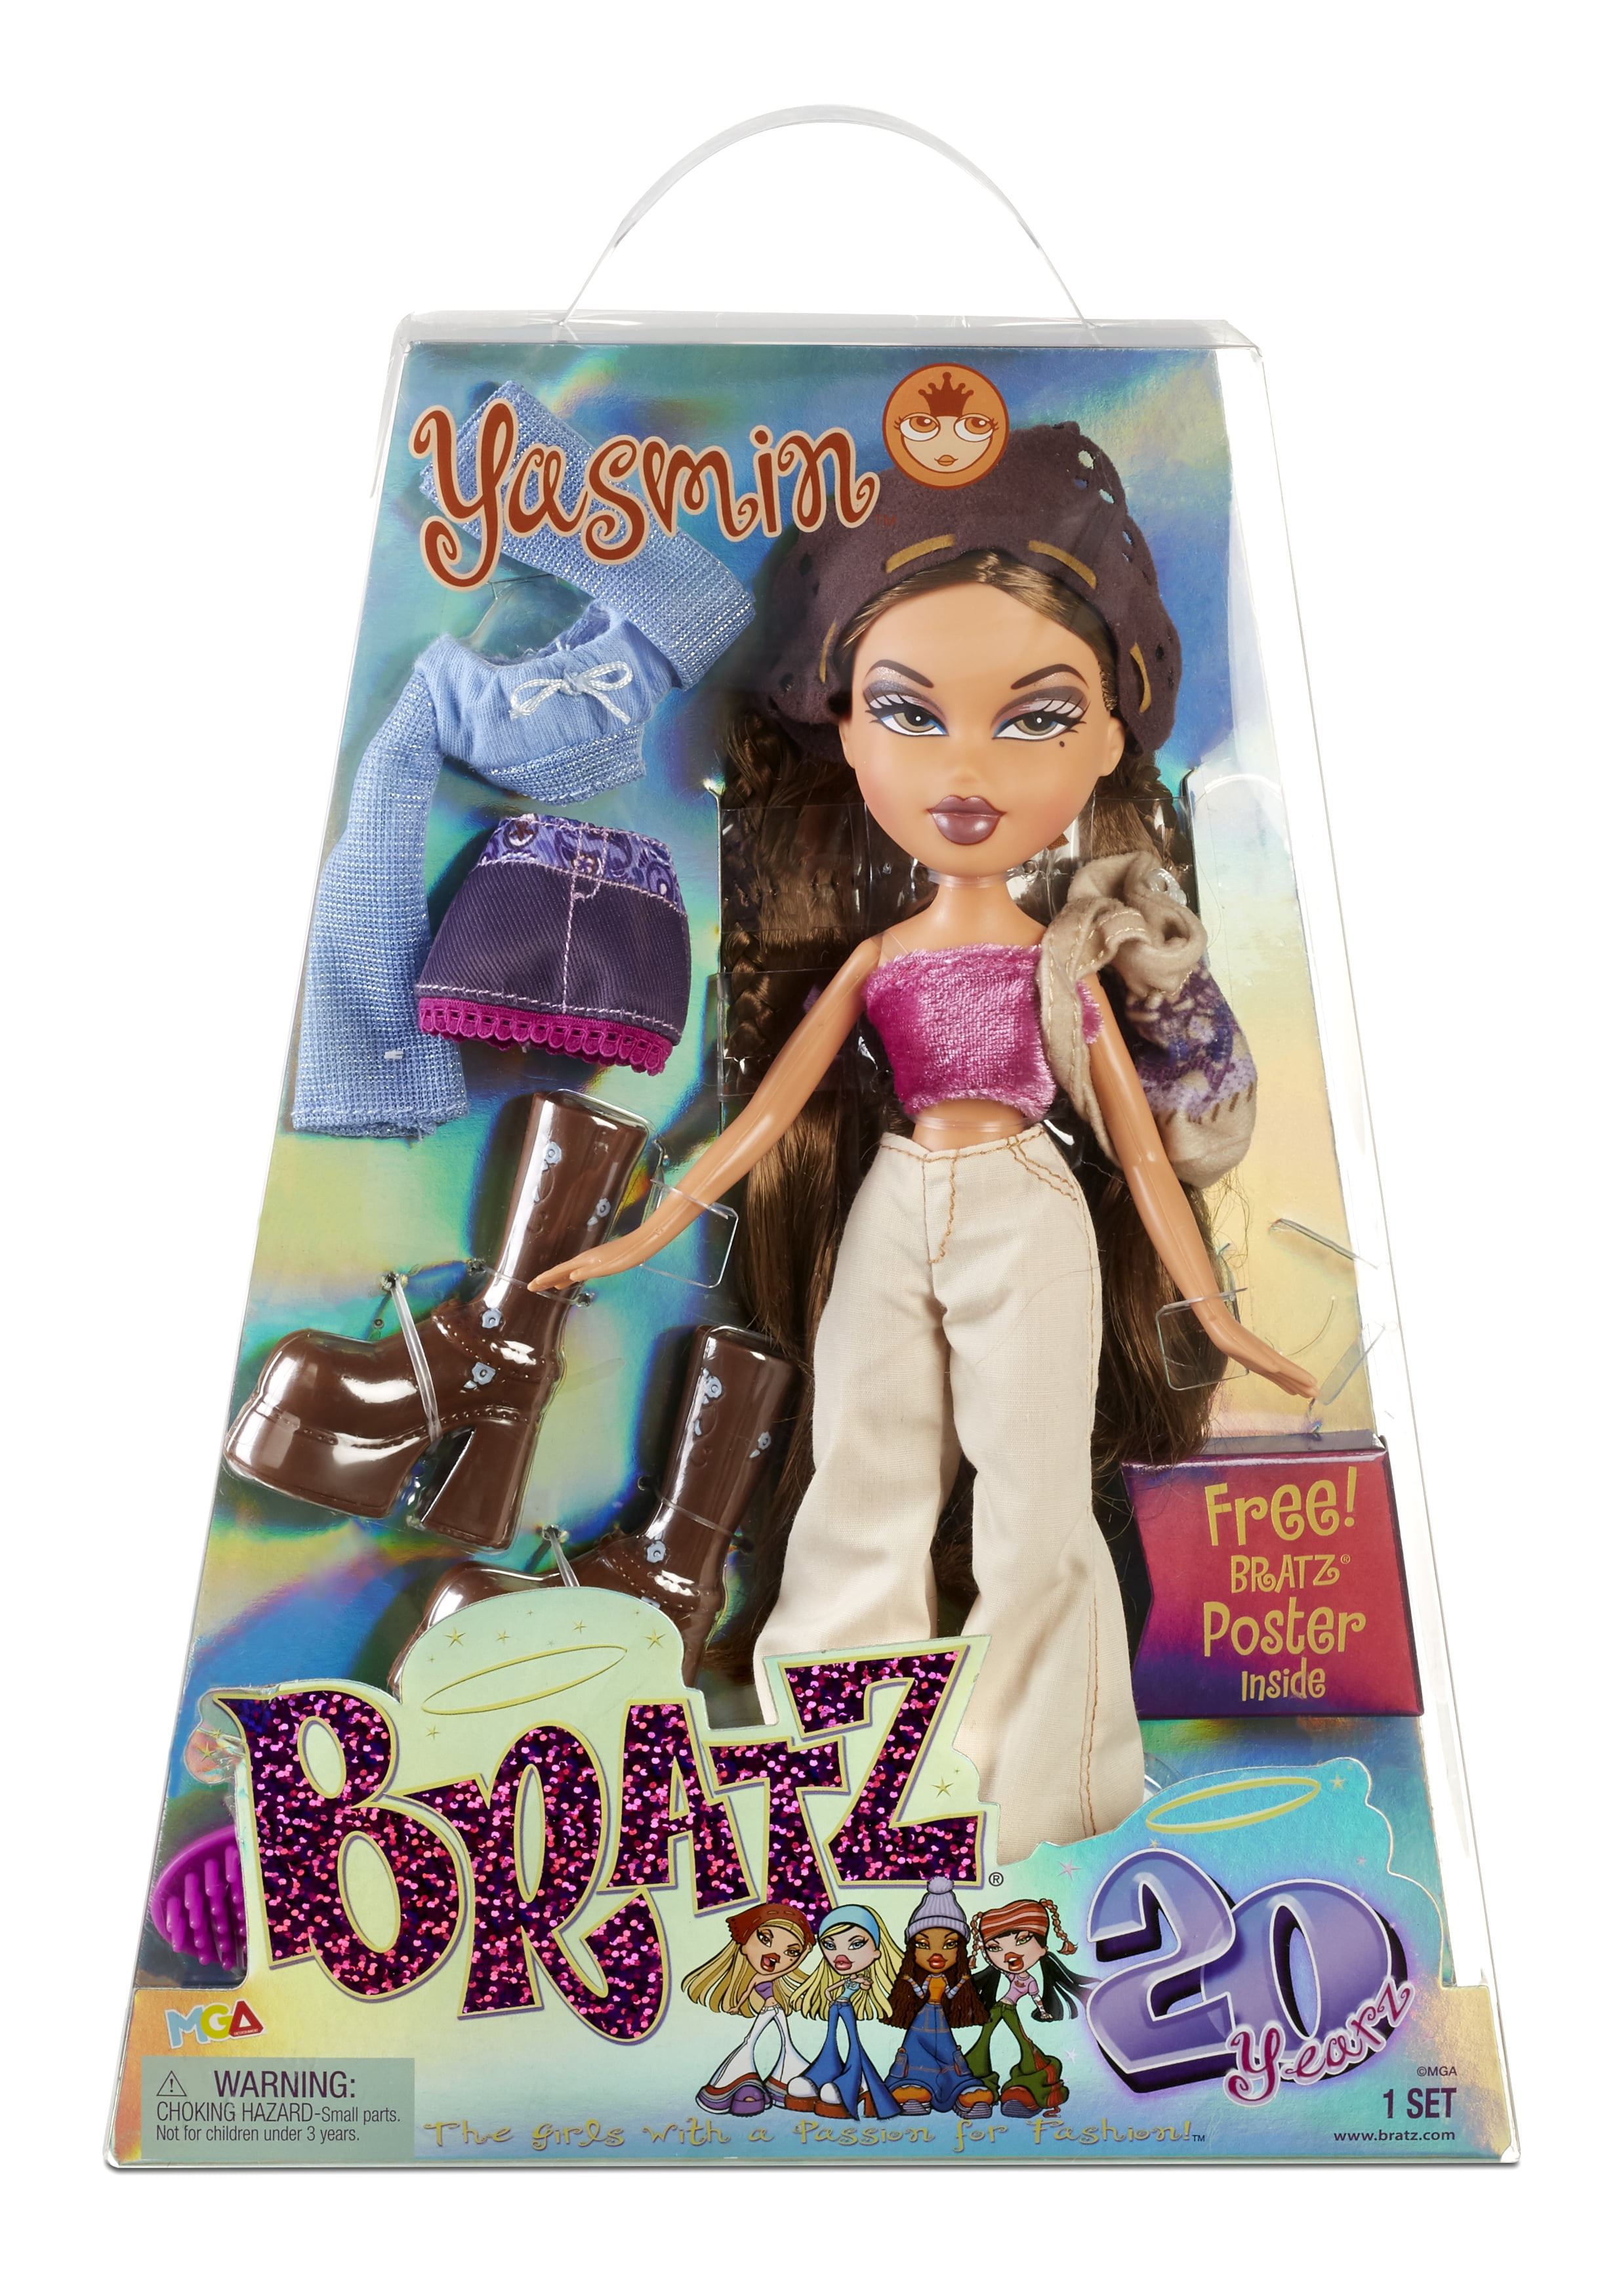 Bratz 20 Yearz Special Edition Original Fashion Doll Cote dIvoire